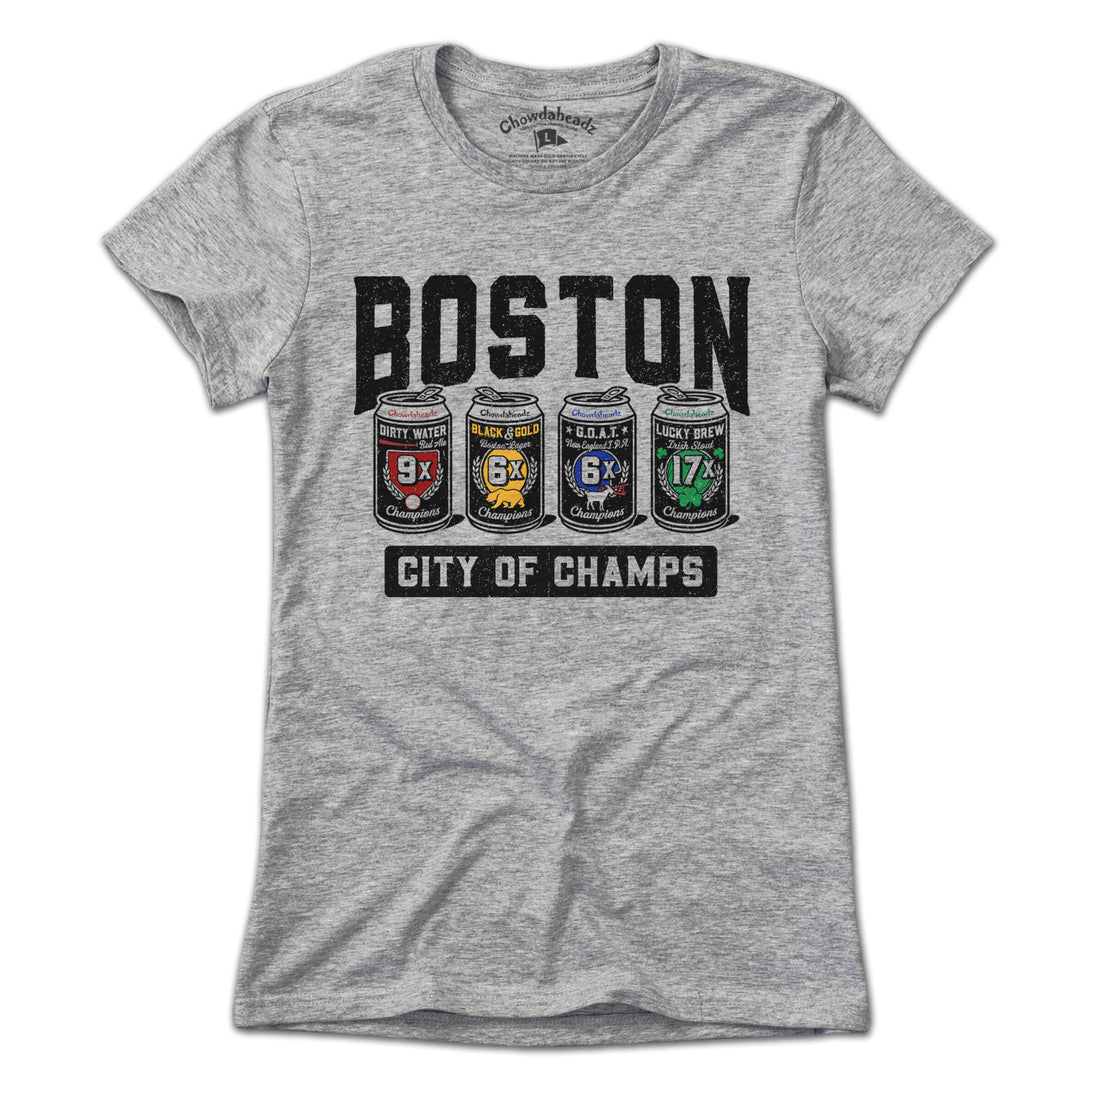 Boston 4-Pack Champions T-Shirt - Chowdaheadz